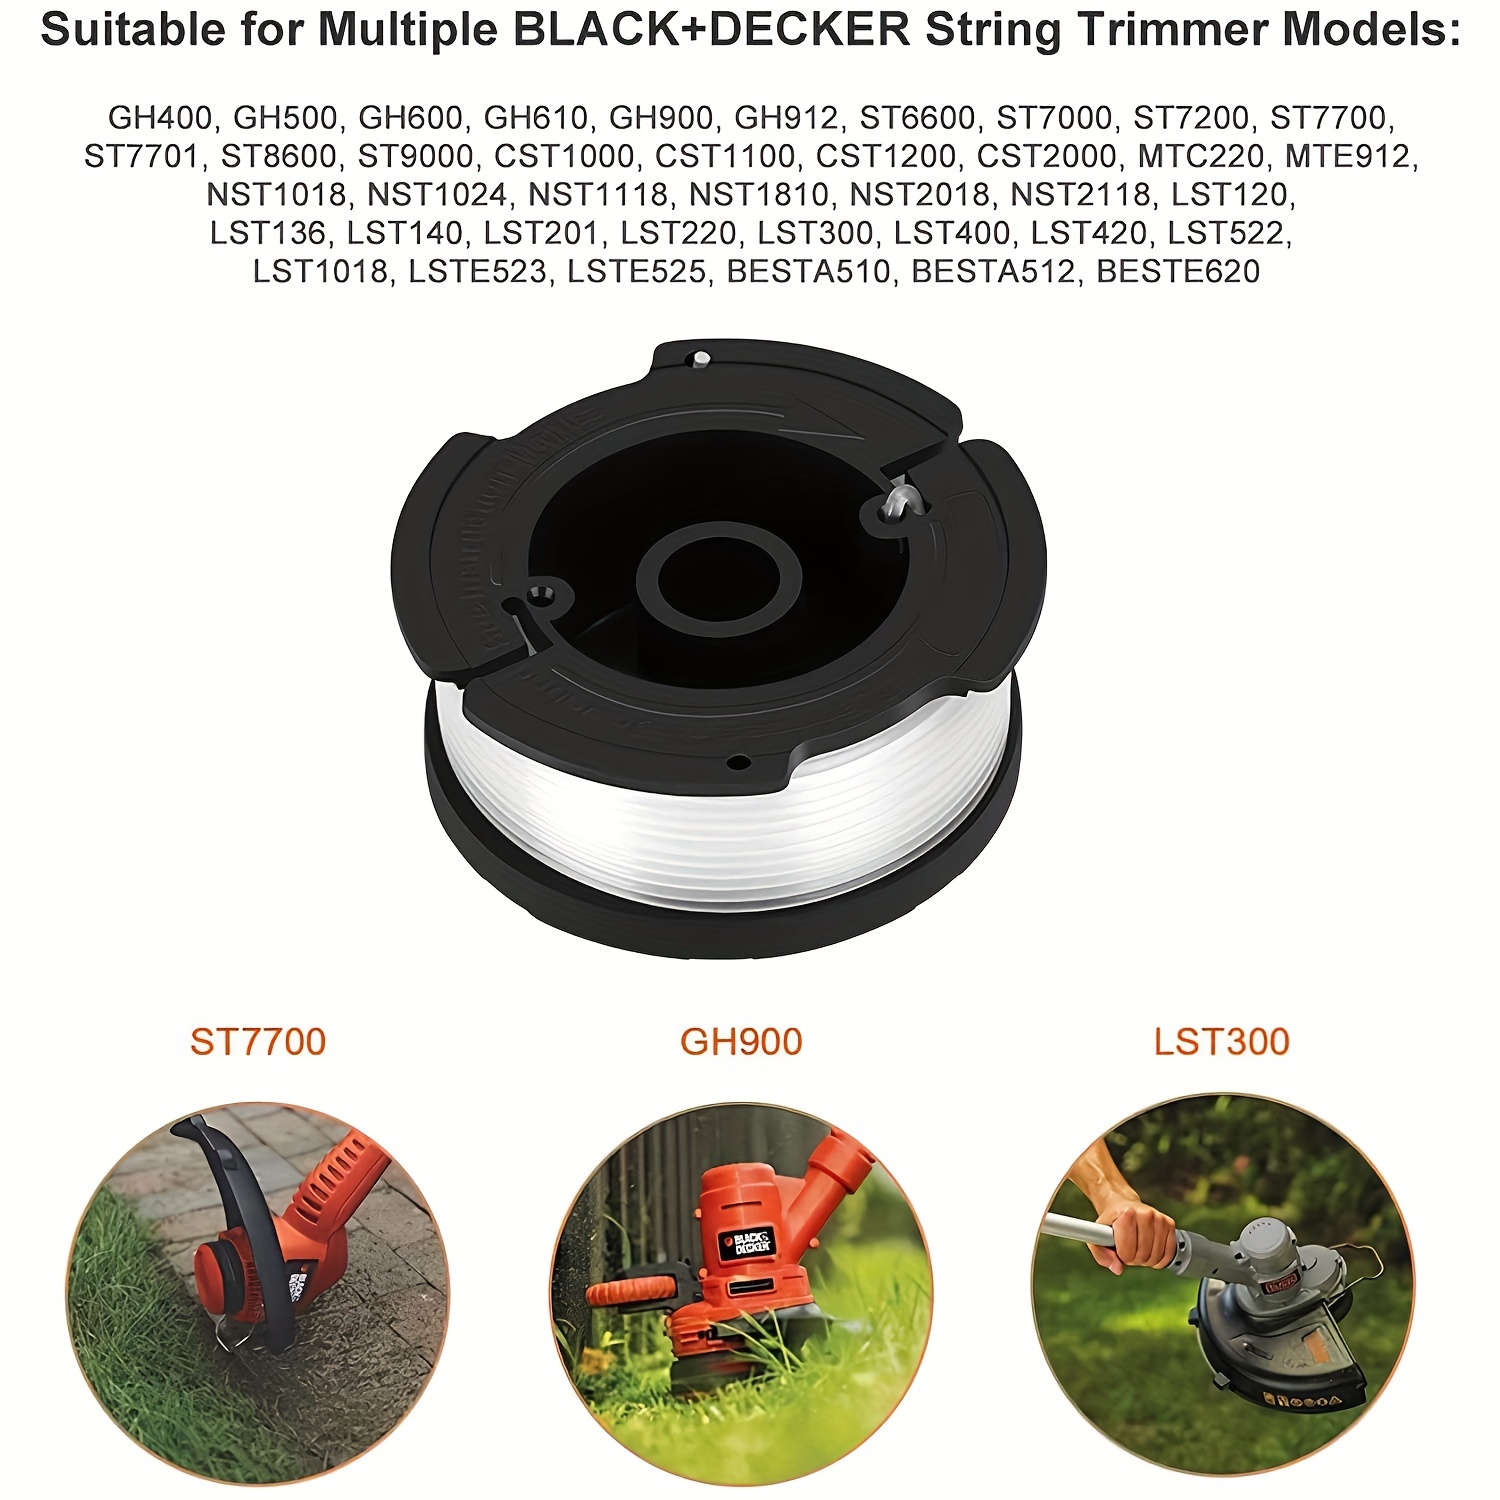 Black+decker Af-100-3zp 30ft 0.065 Line String Trimmer Replacement Spool 3-Pack